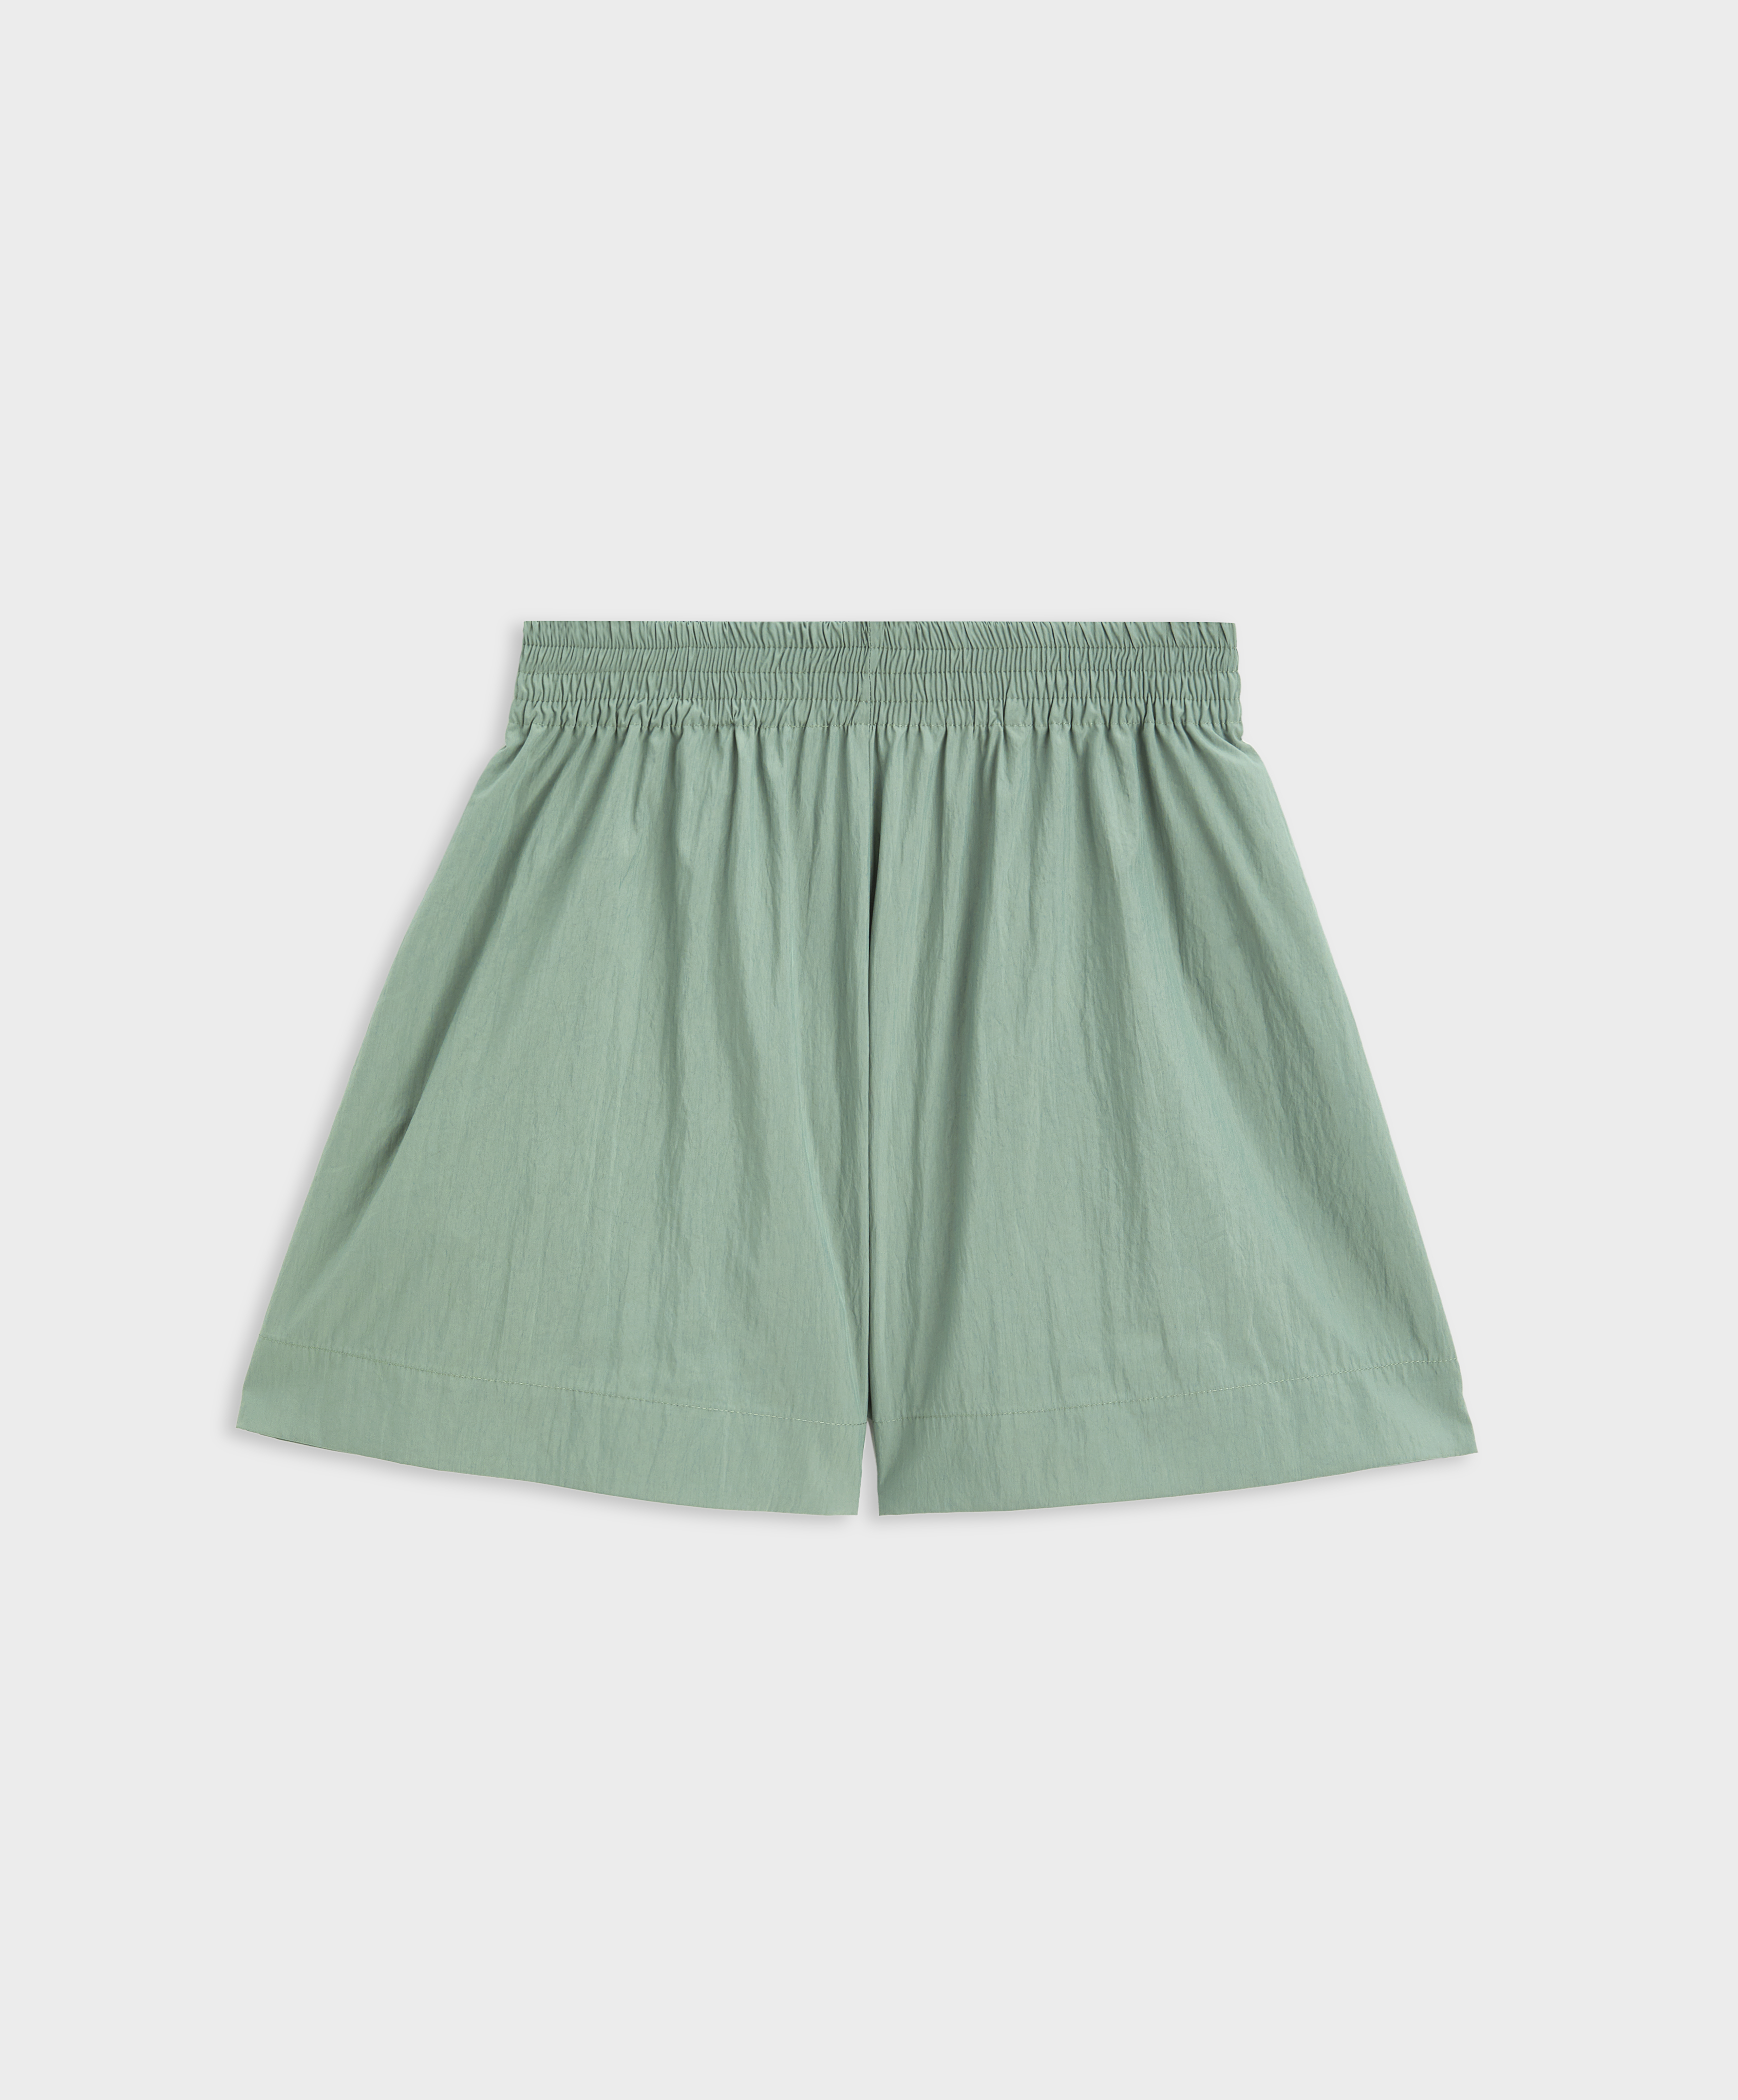 Shorts aus Nylon